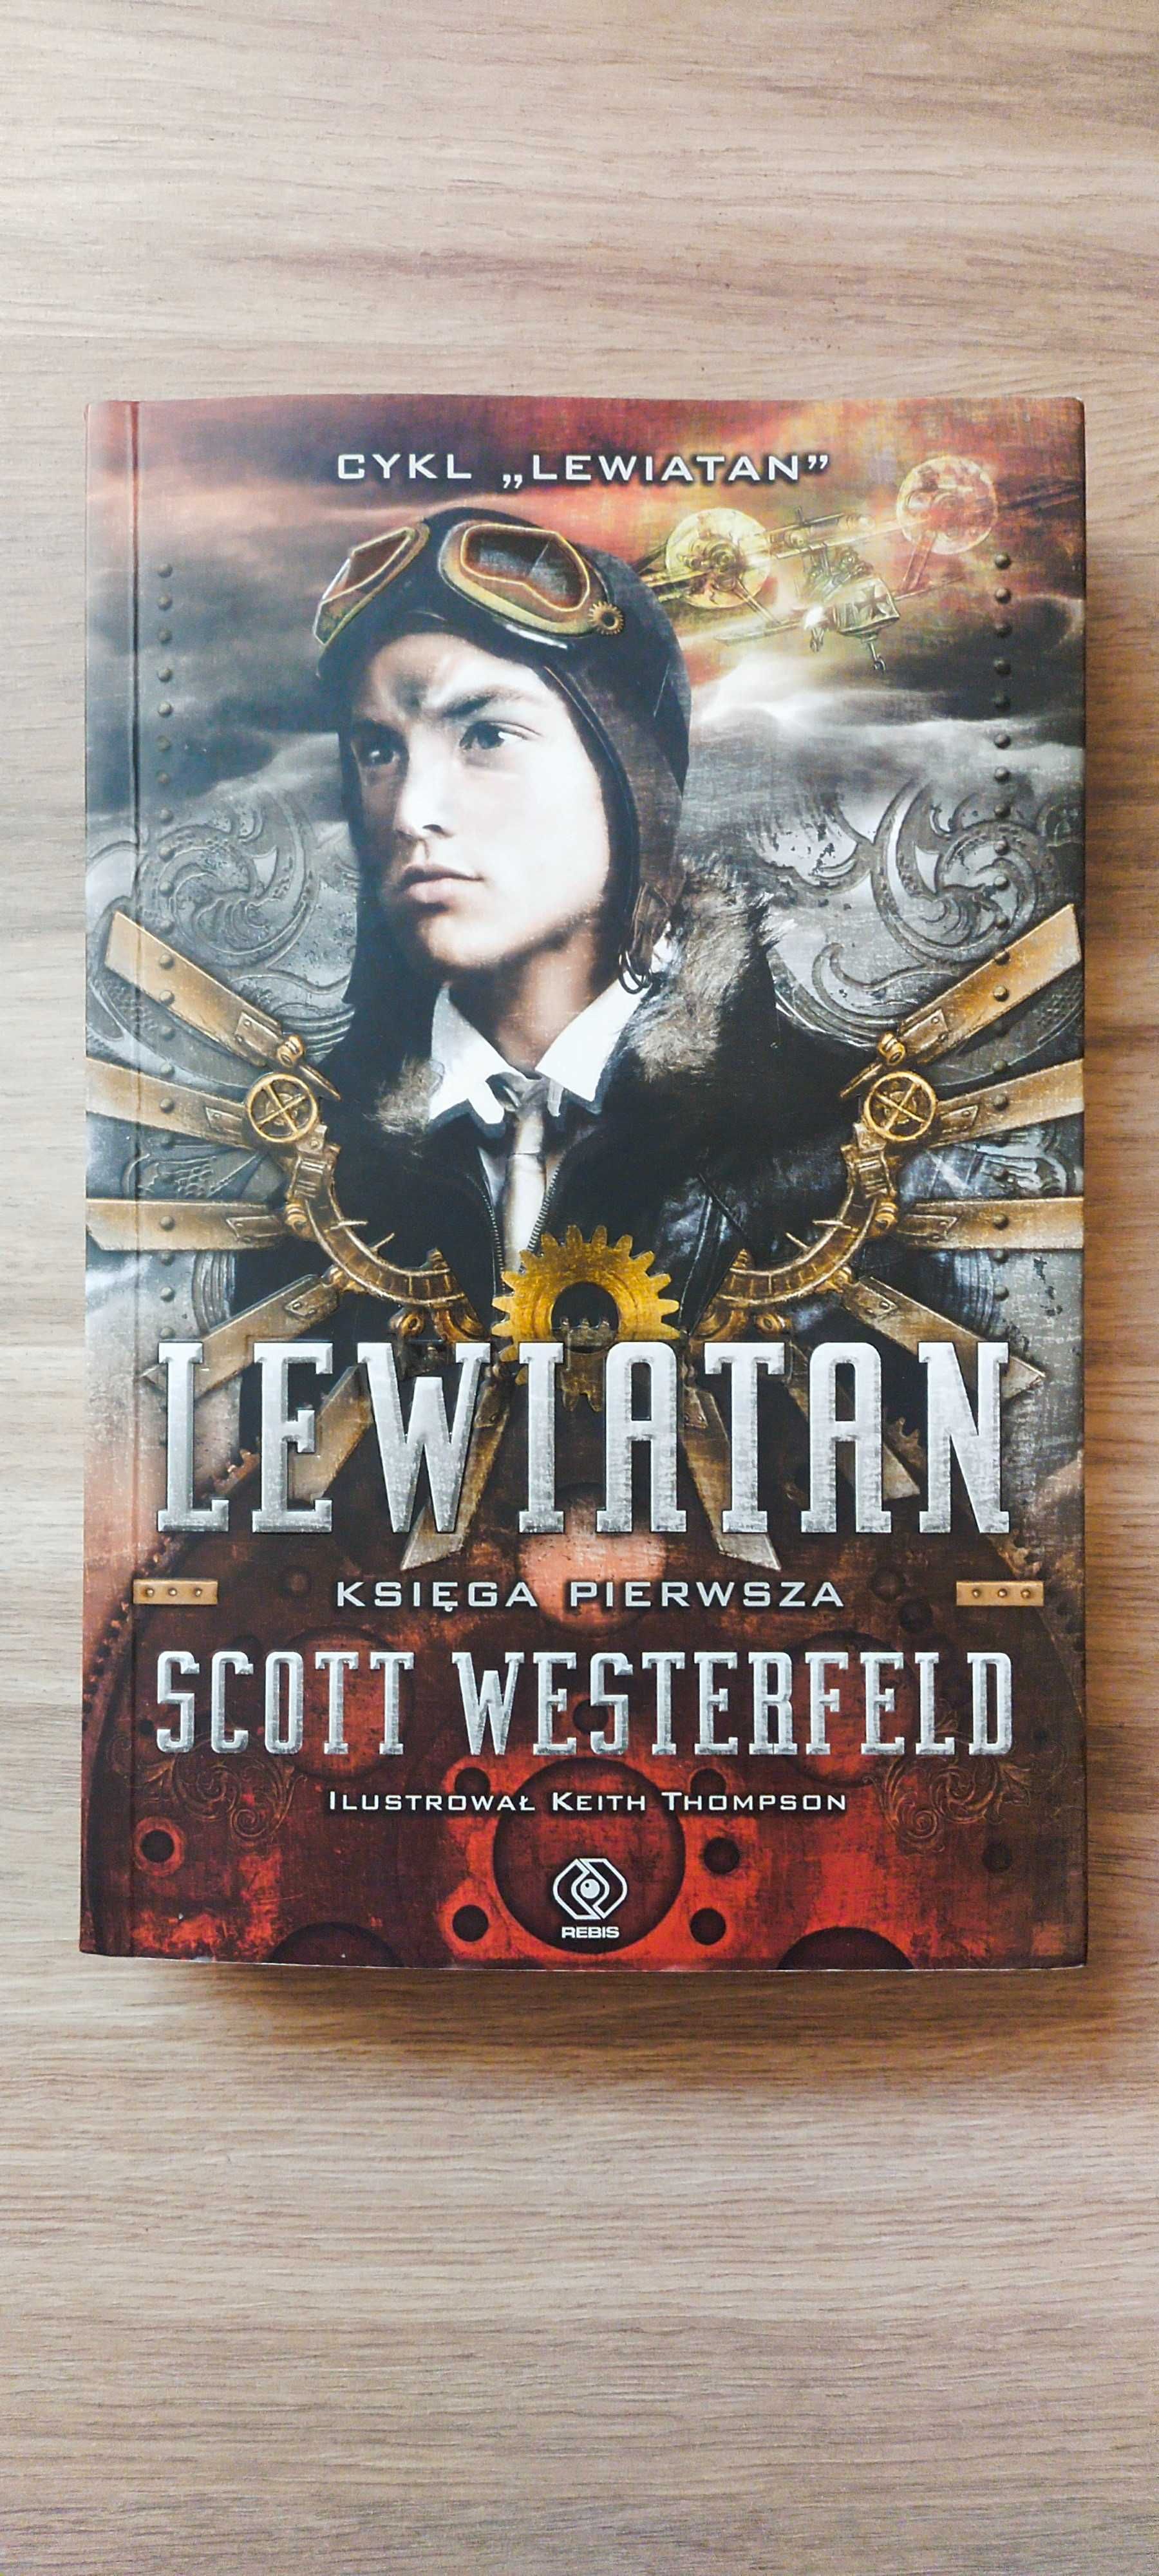 Lewiatan

Scott Westerfeld